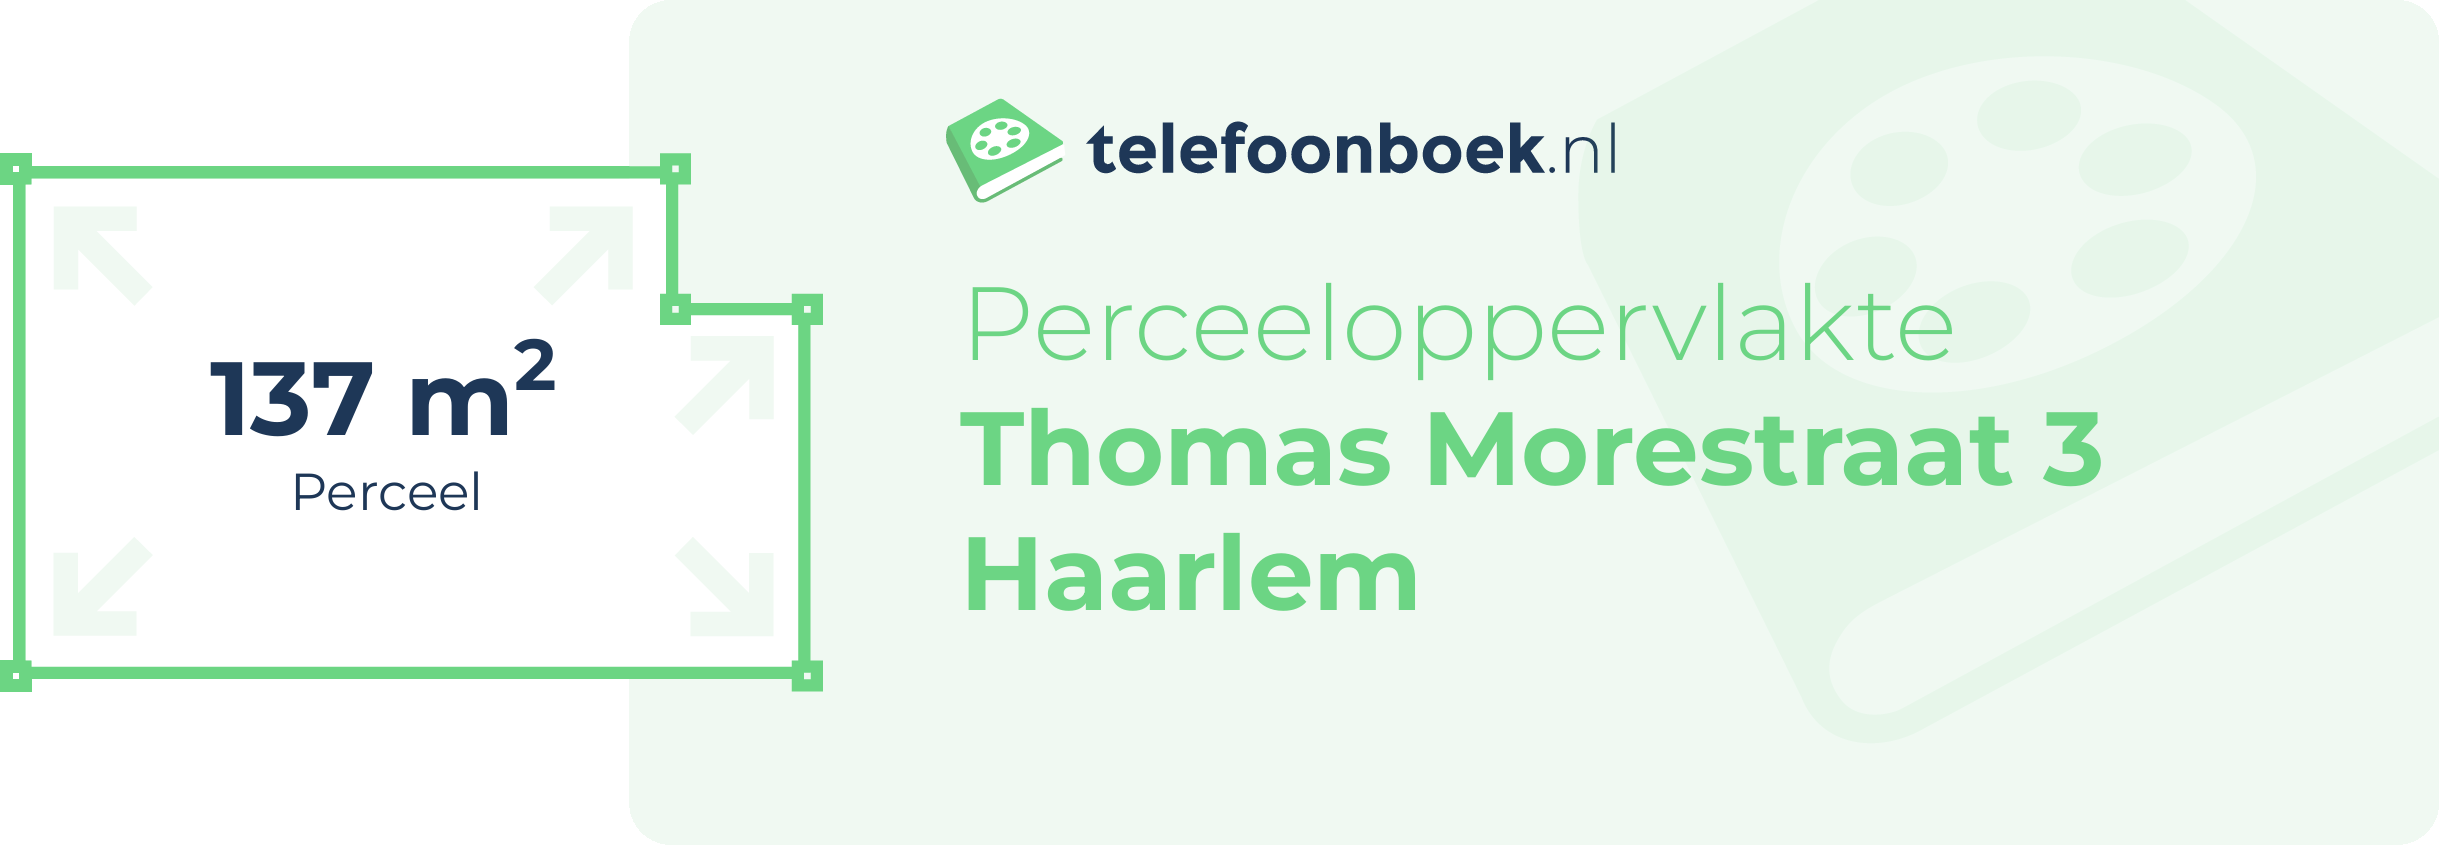 Perceeloppervlakte Thomas Morestraat 3 Haarlem